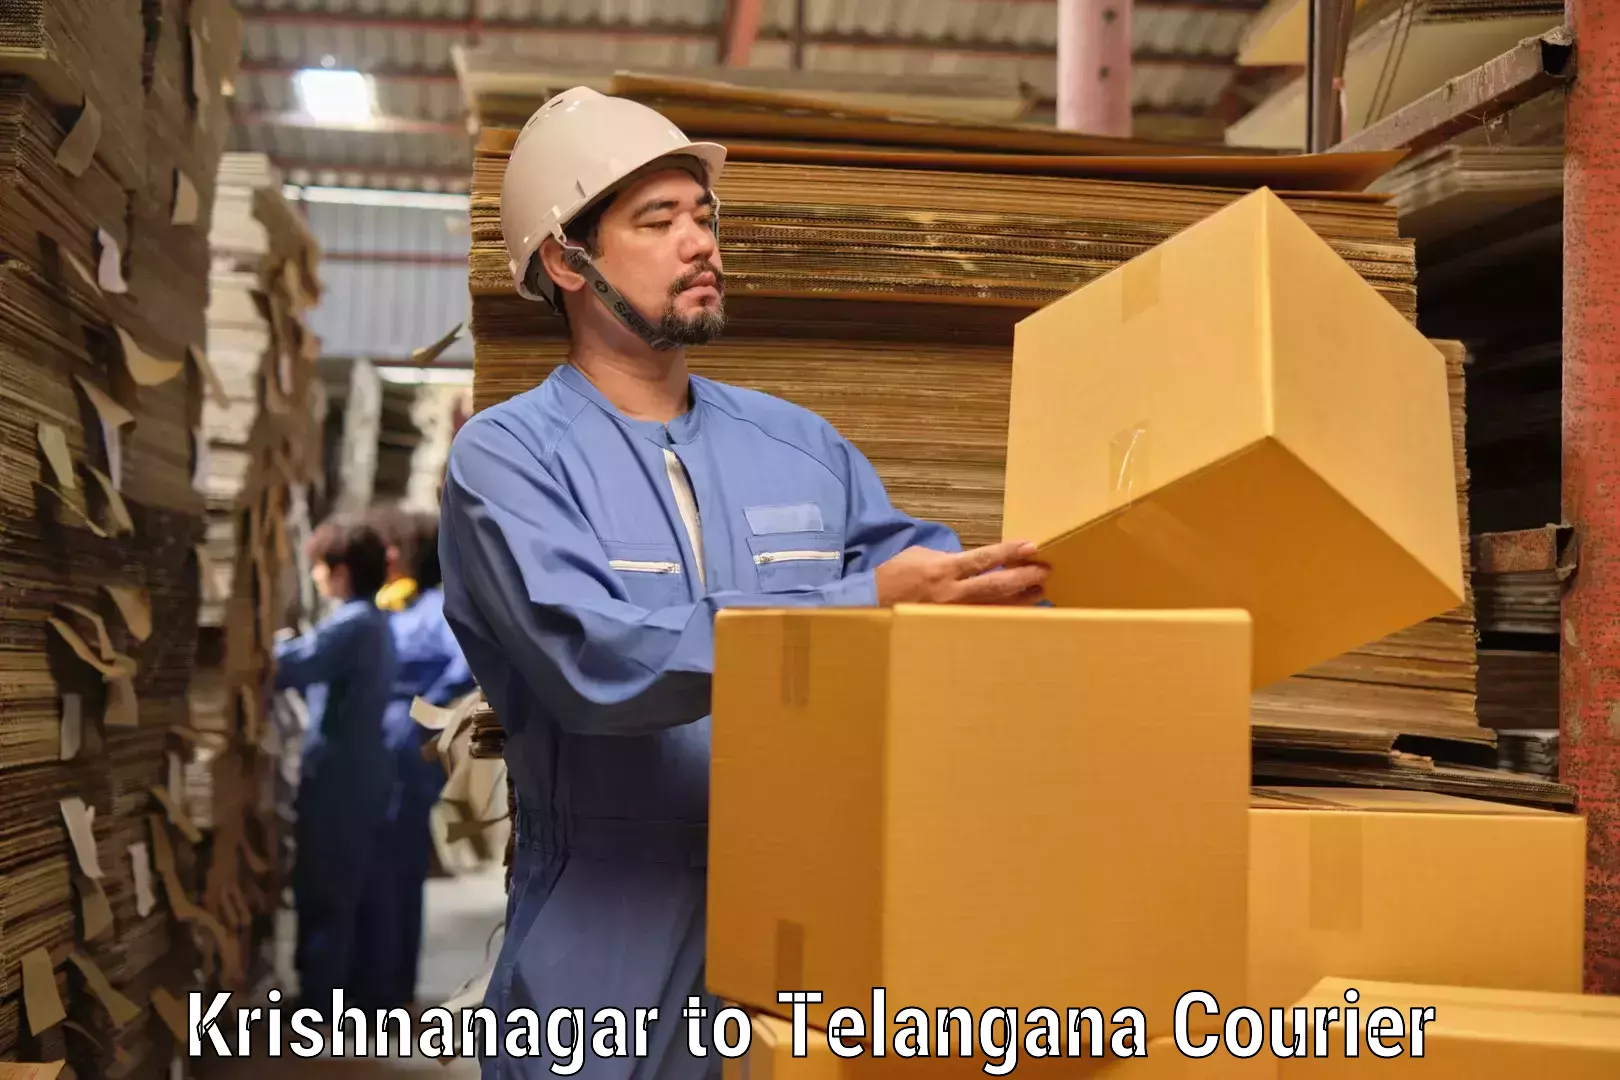 Global logistics network Krishnanagar to Karimnagar